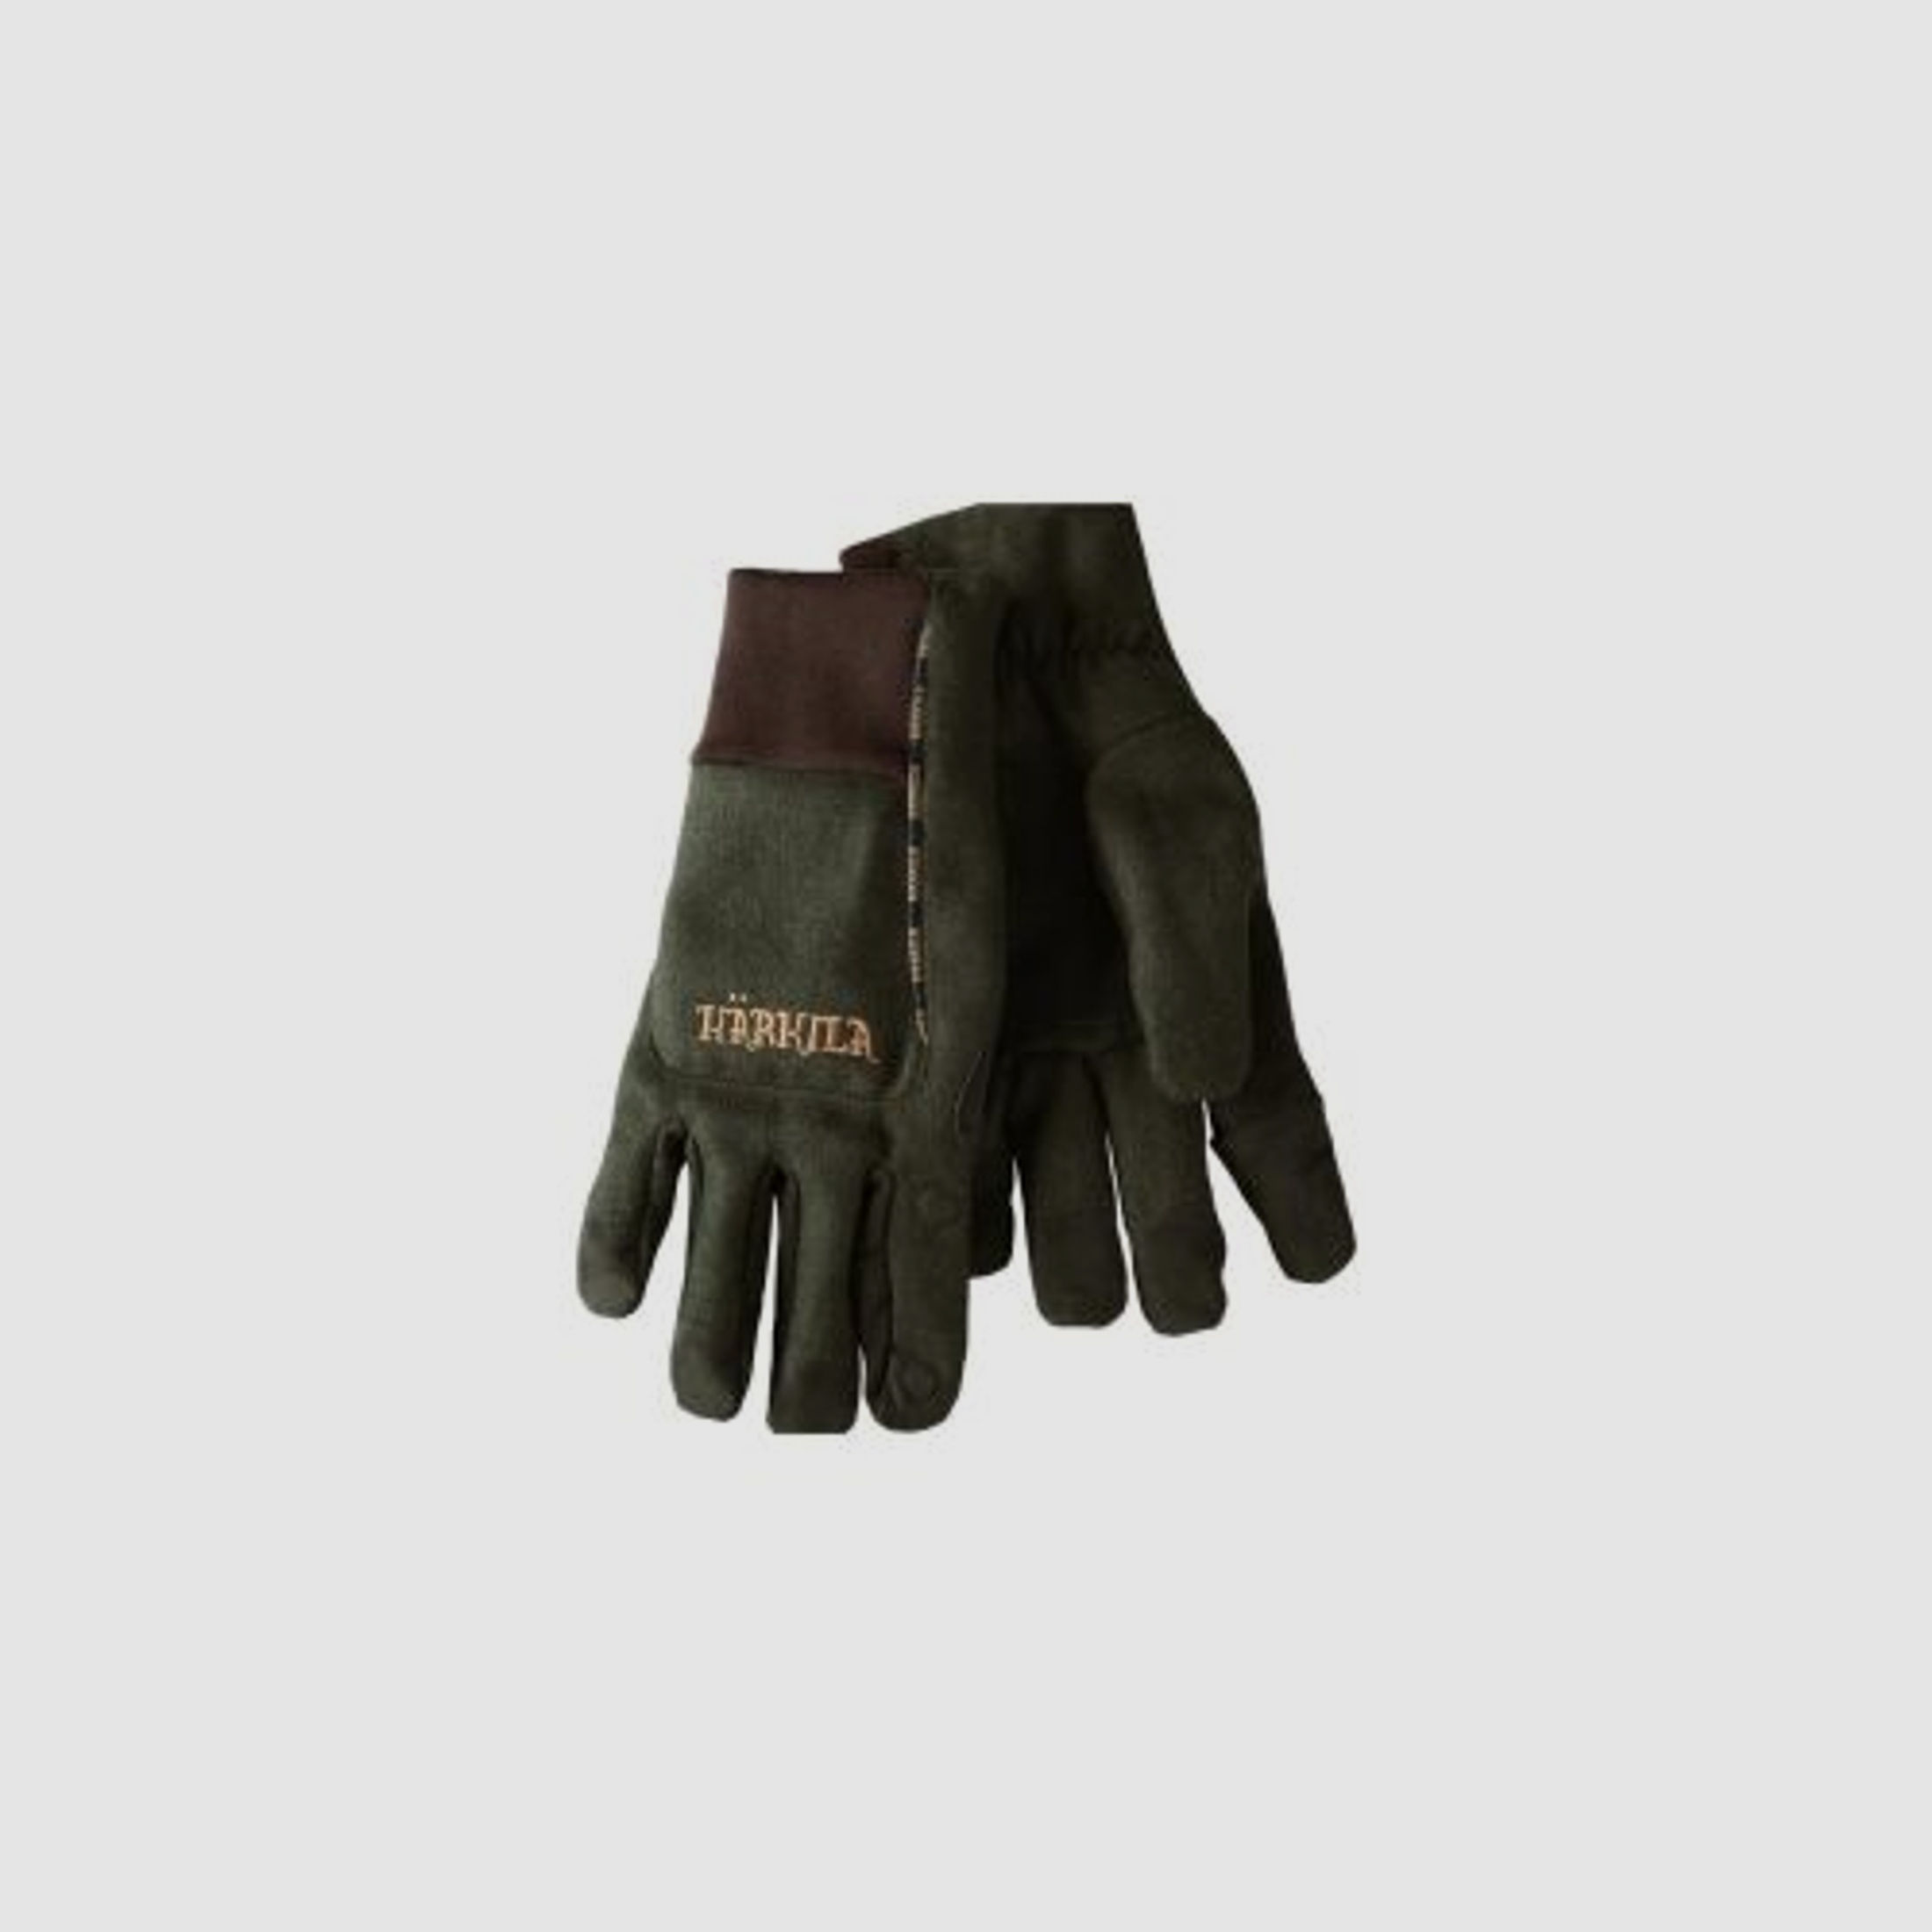 H?rkila Metso Active Handschuhe Willow green